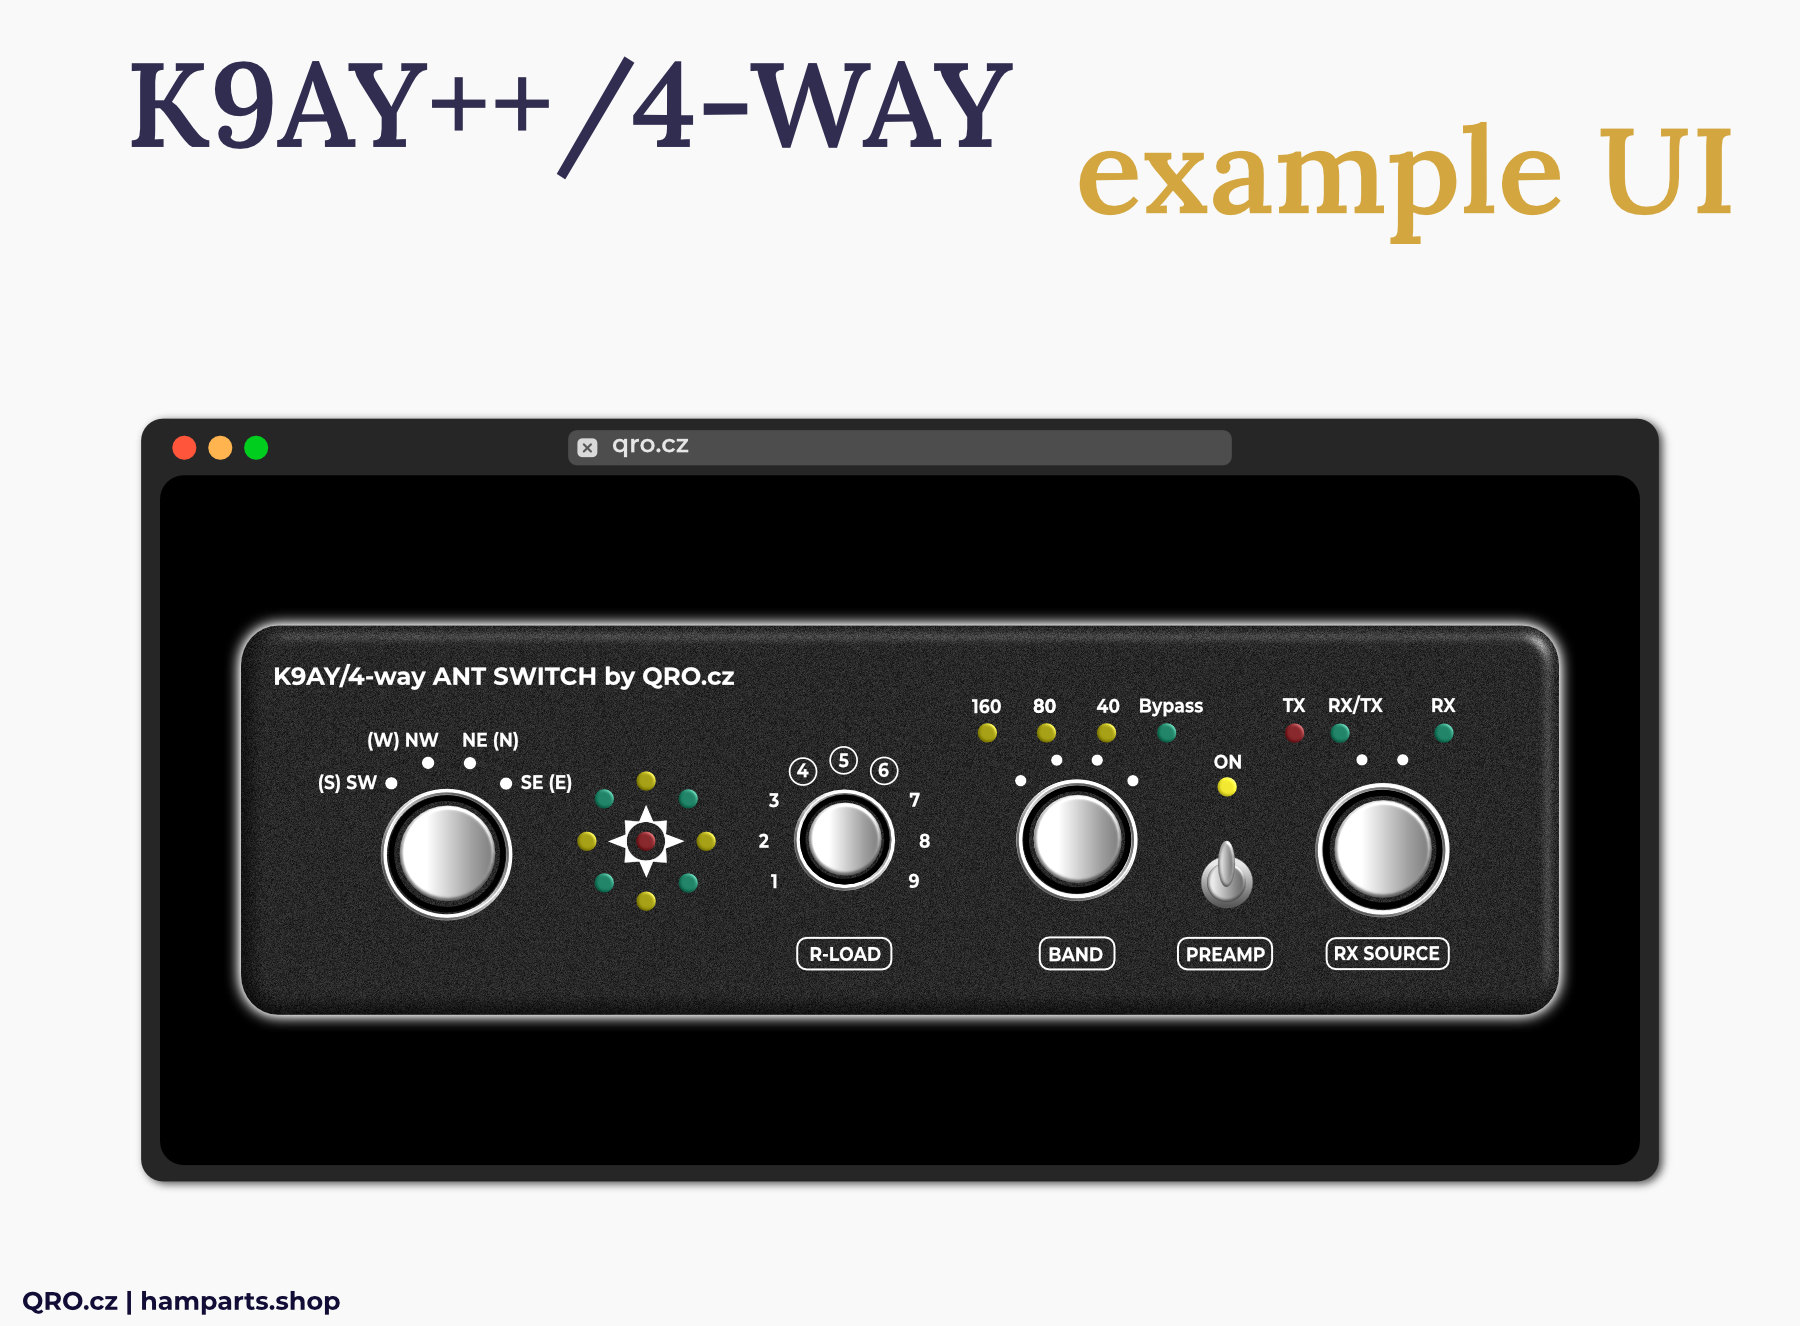 ui example k9ay++/4-way controller qro.cz hamparts.shop